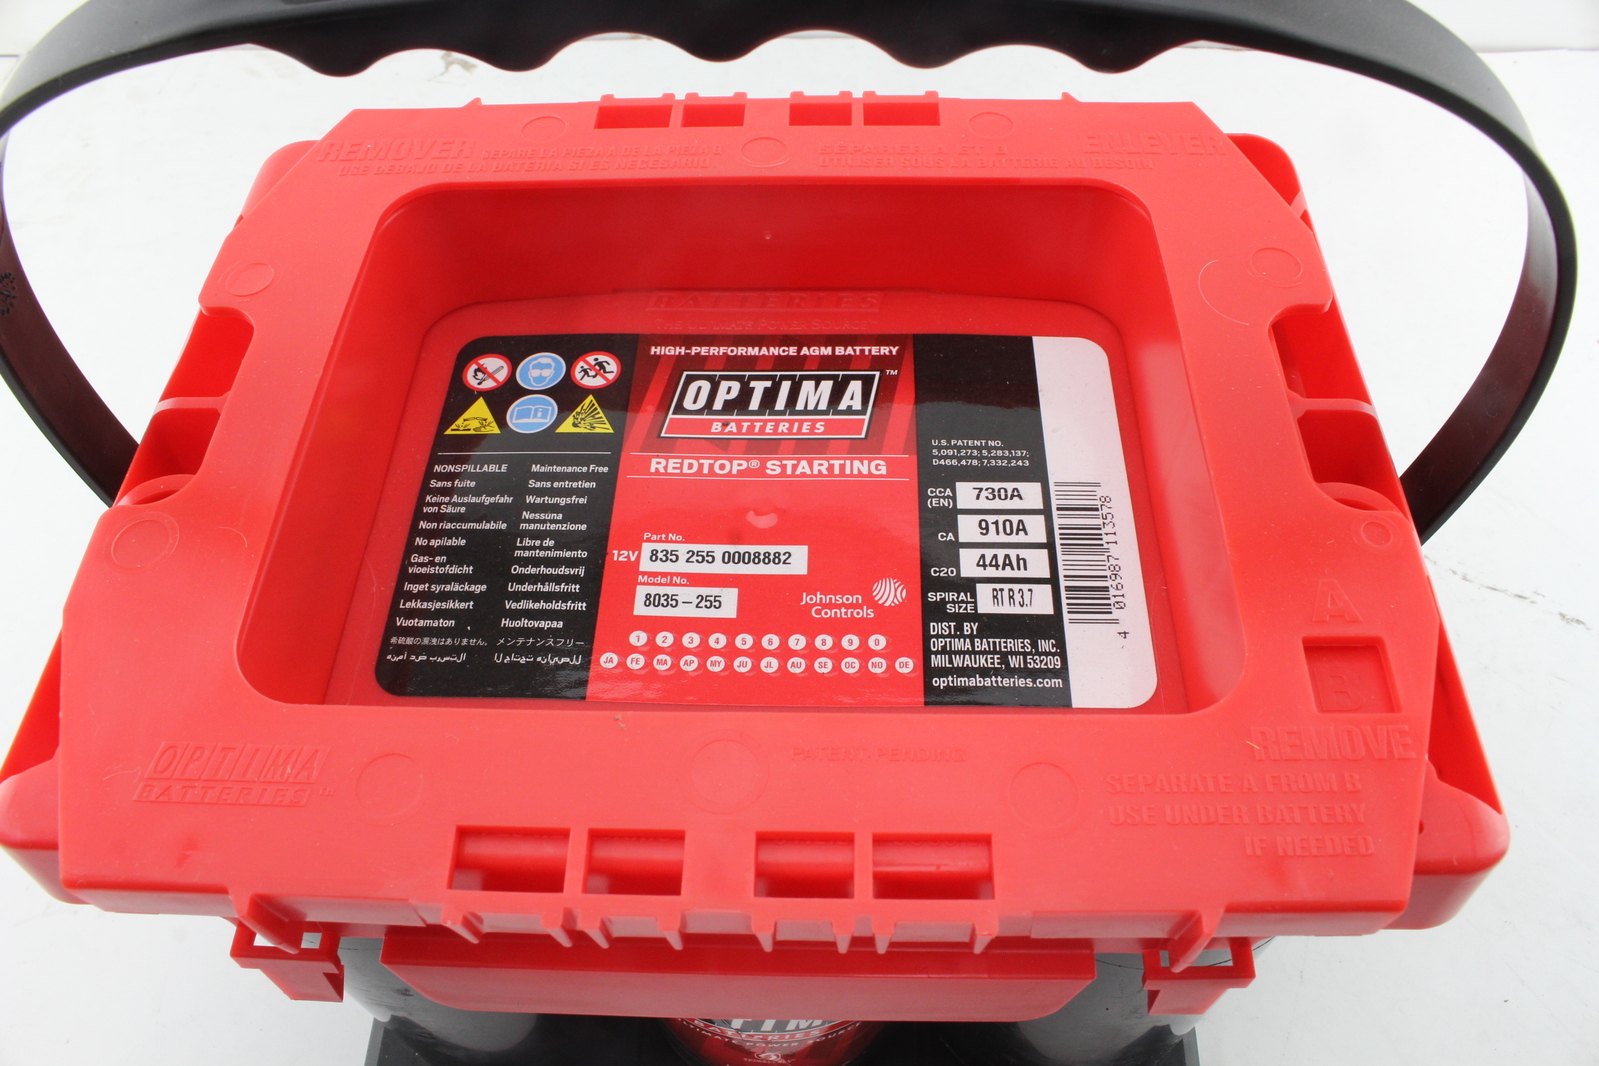 Autobatterie Optima RTU3.7 Red Top 12V 44Ah 730A - Rupteur